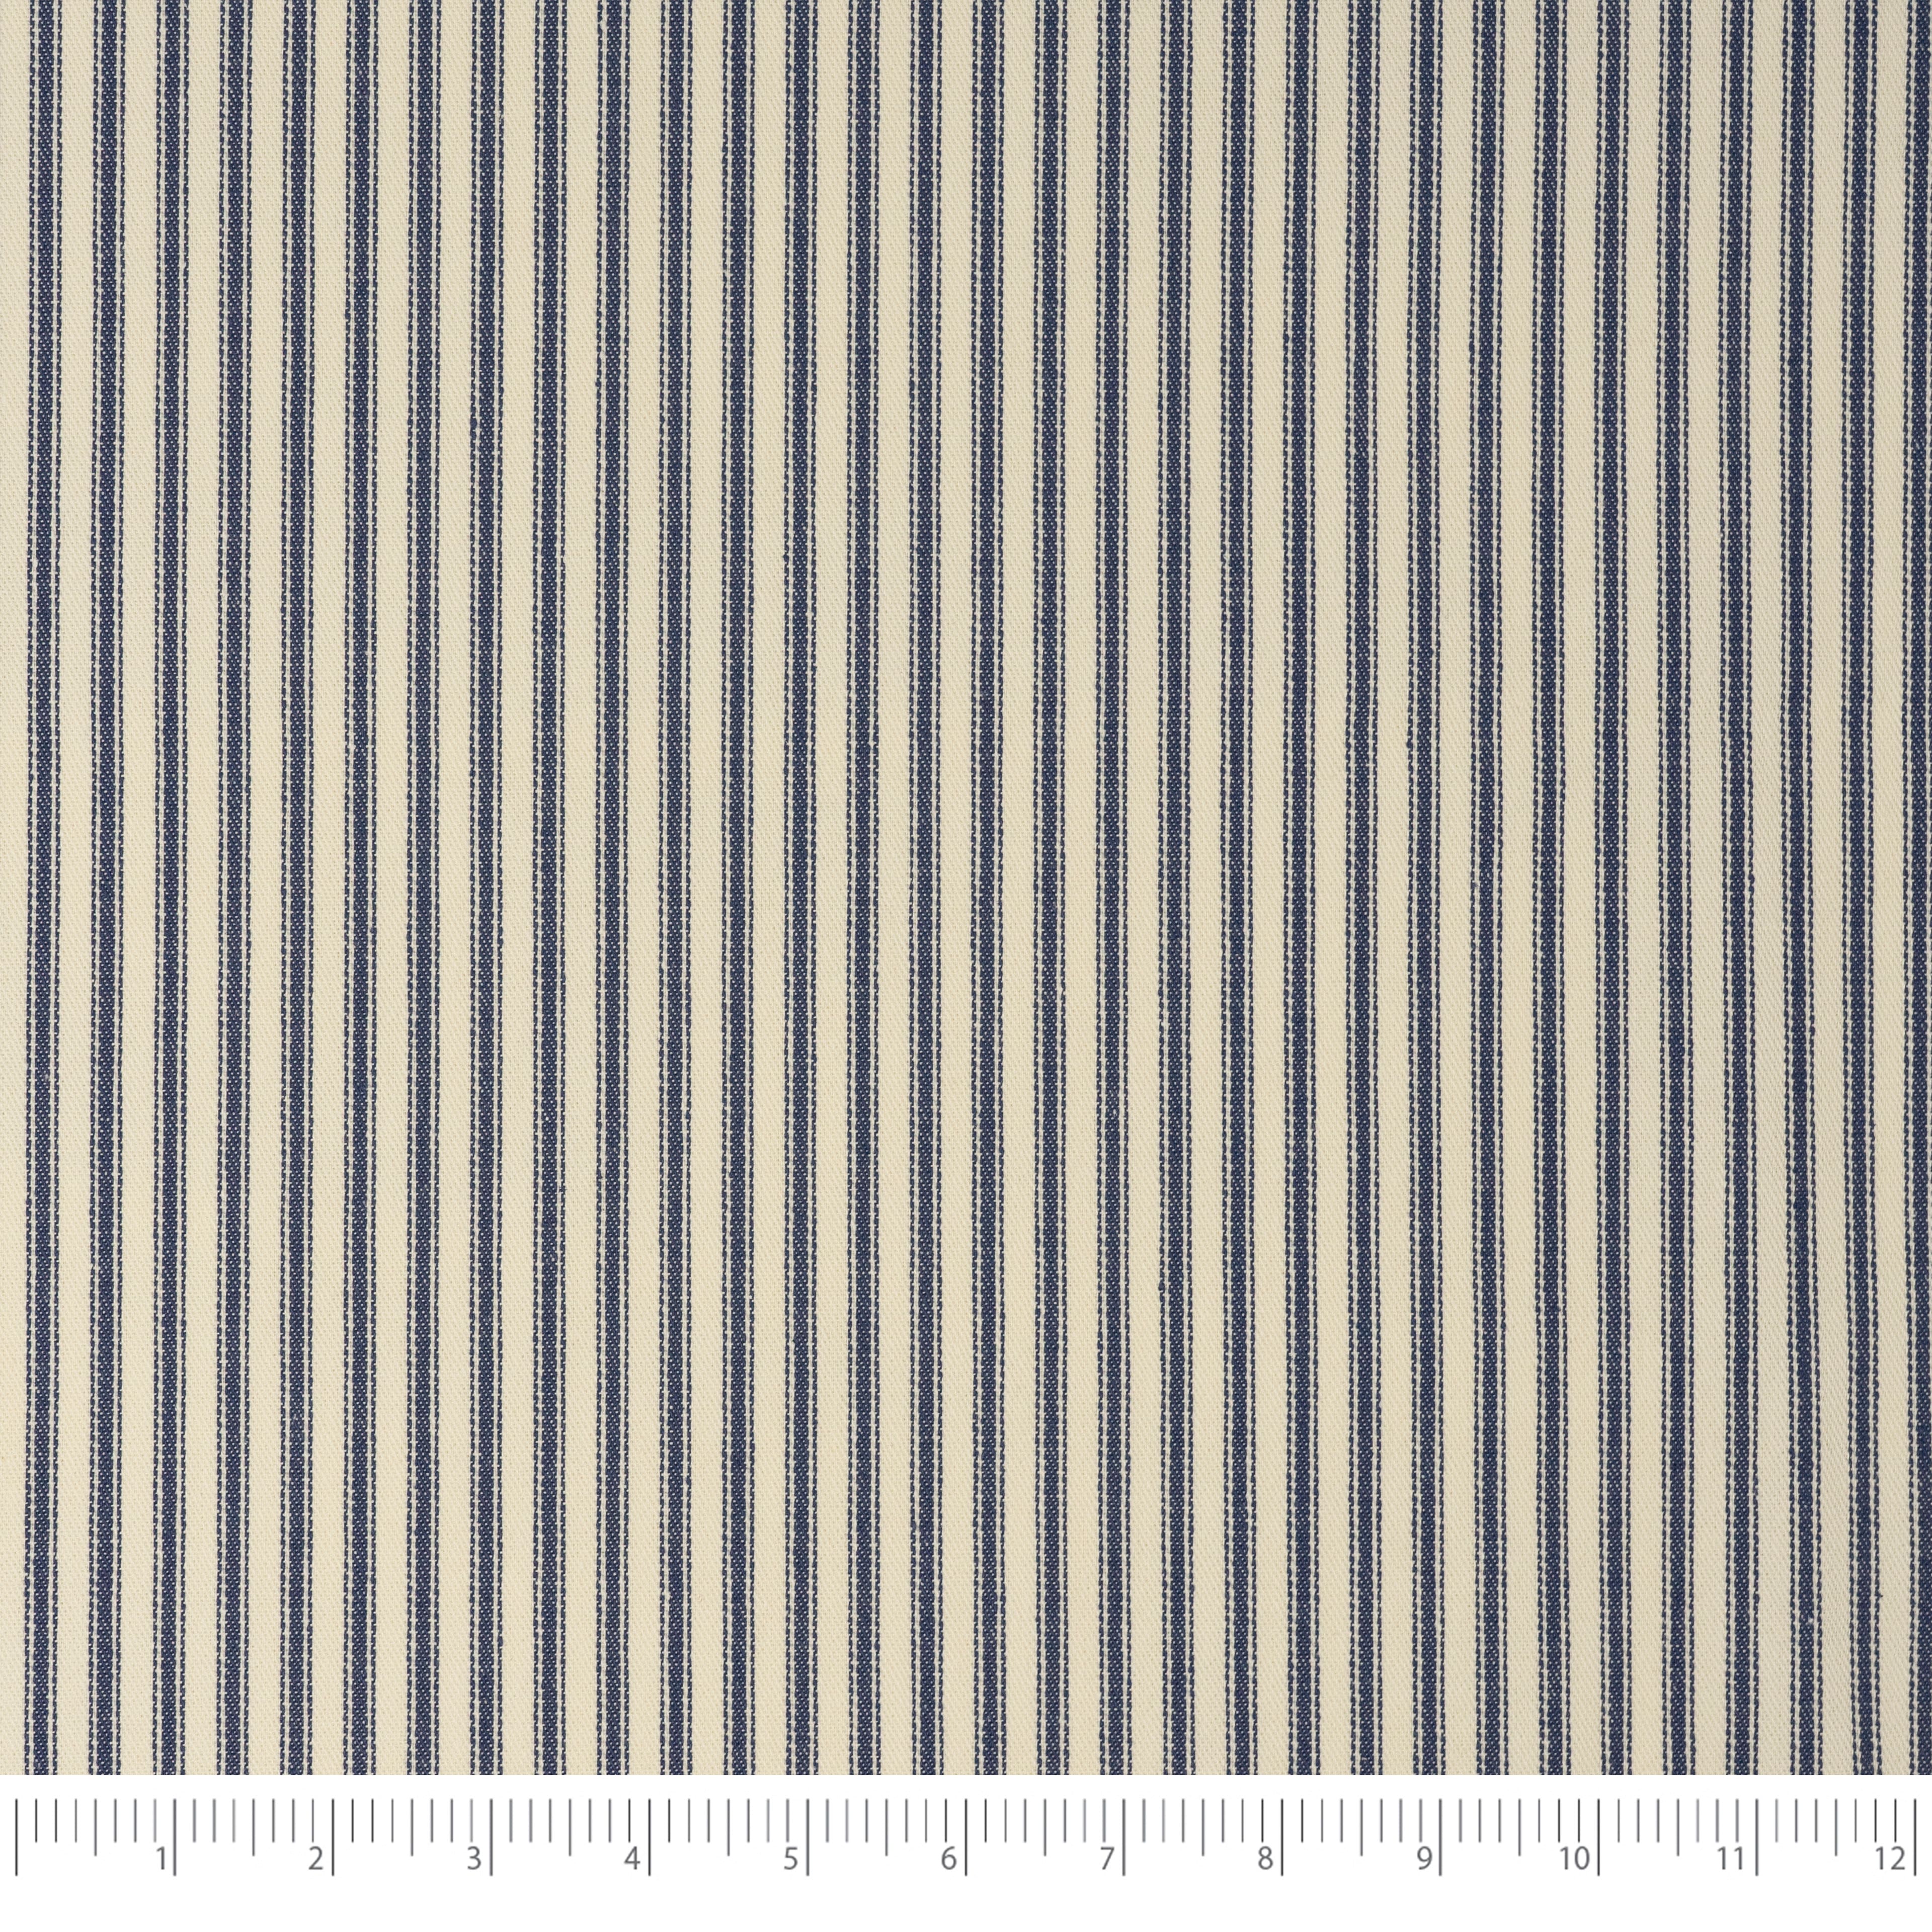 Roc-Lon Woven Ticking Stripe Cotton Fabric